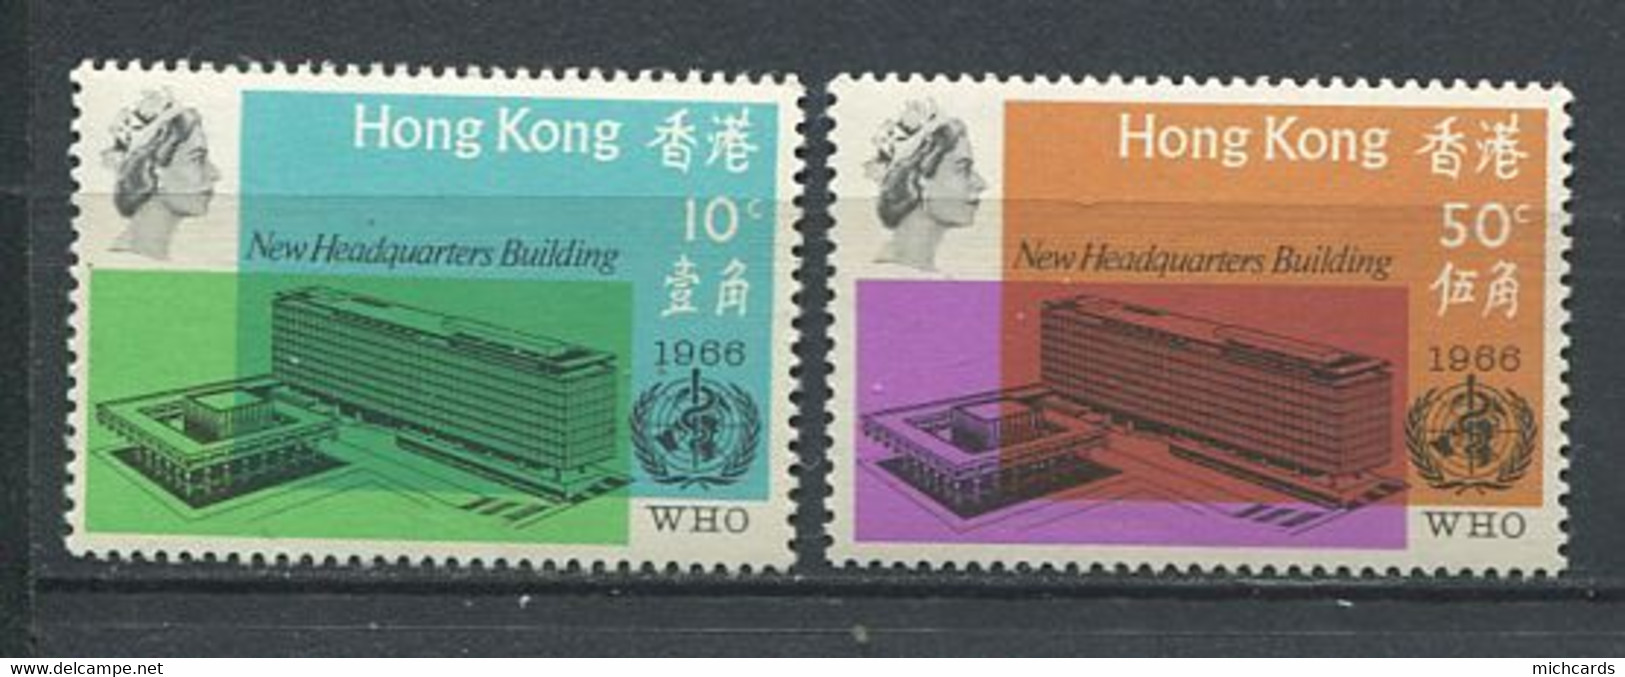 232 HONG KONG 1966 - Yvert 220/21 - Siege Sante A Geneve  - Neuf ** (MNH) Sans Trace De Charniere - Unused Stamps